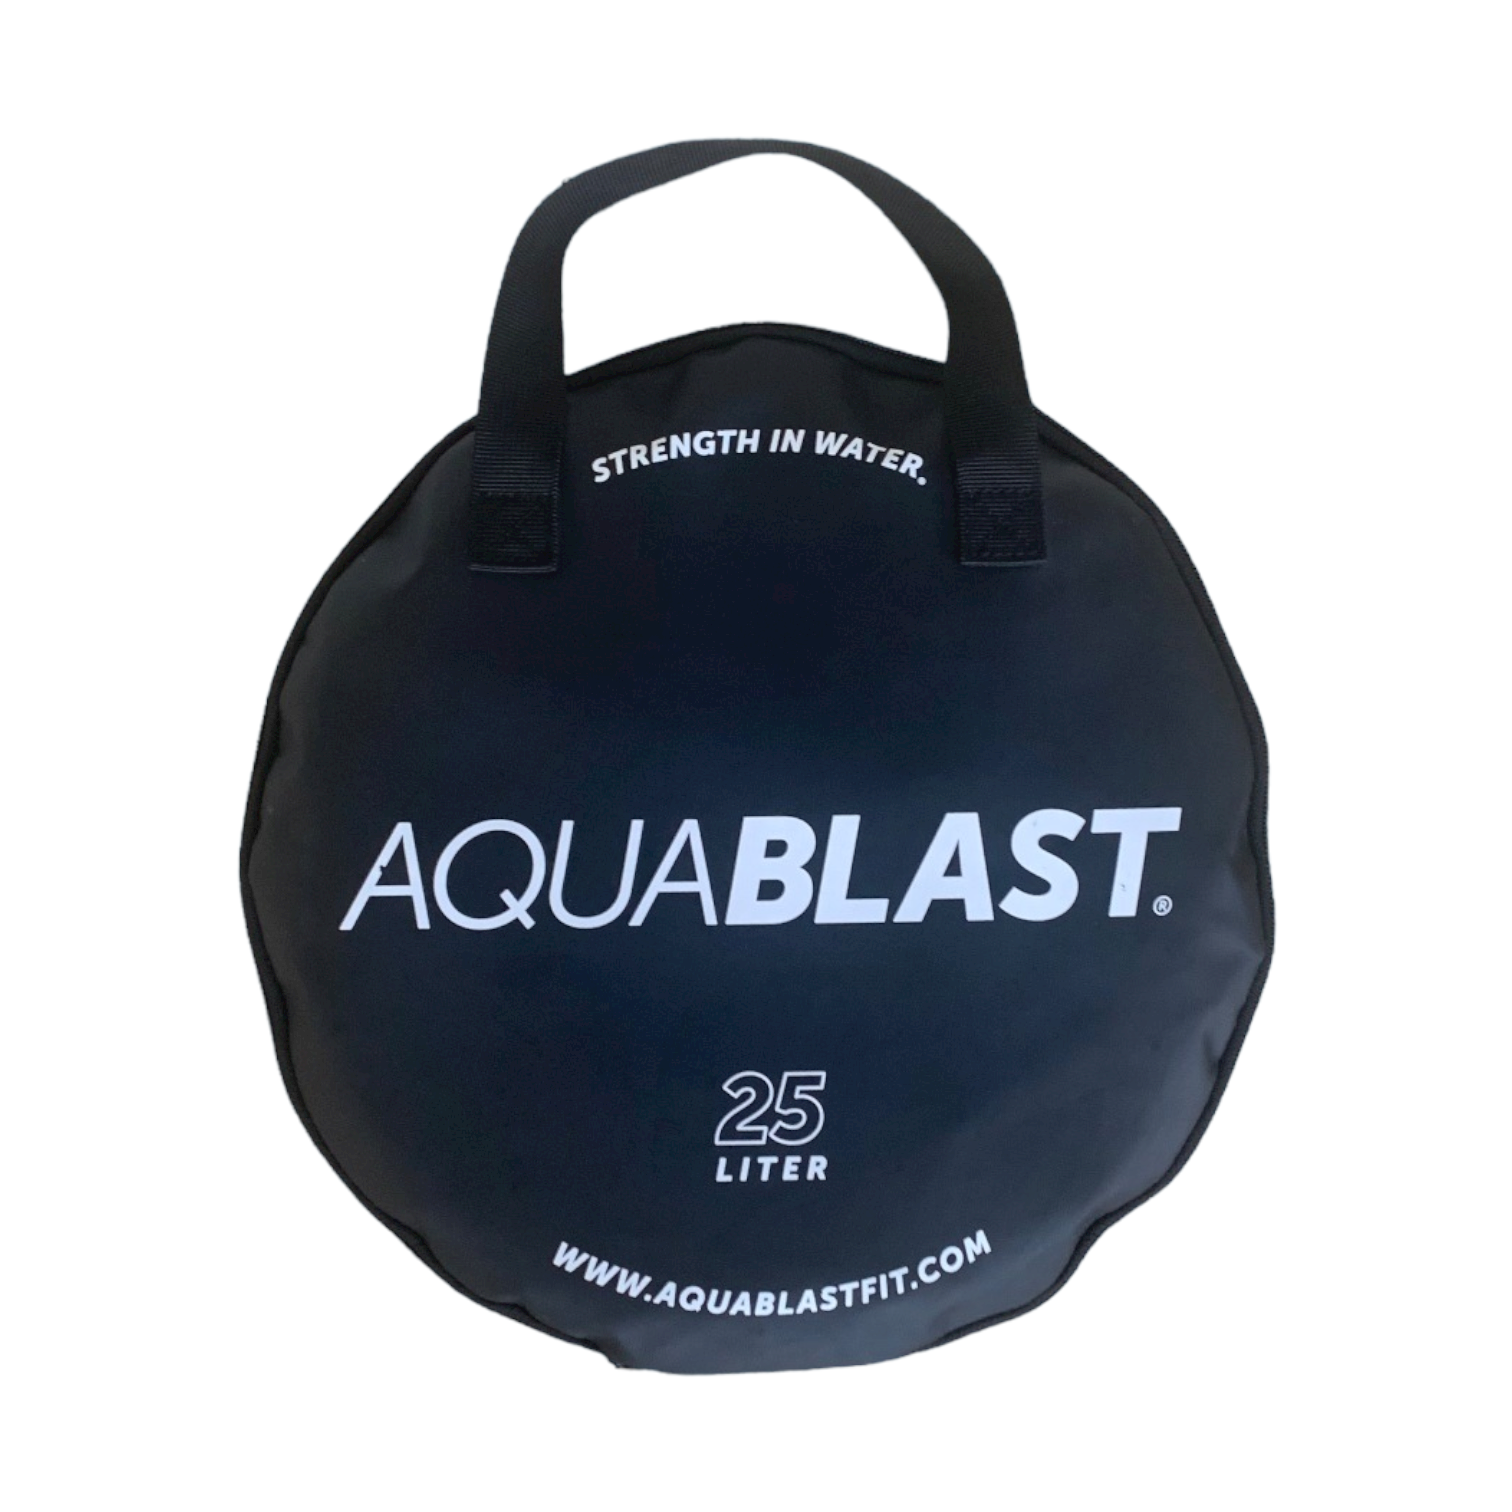 AquaBLAST COMBO - 25 Liter Bag PLUS the Suction Tether System